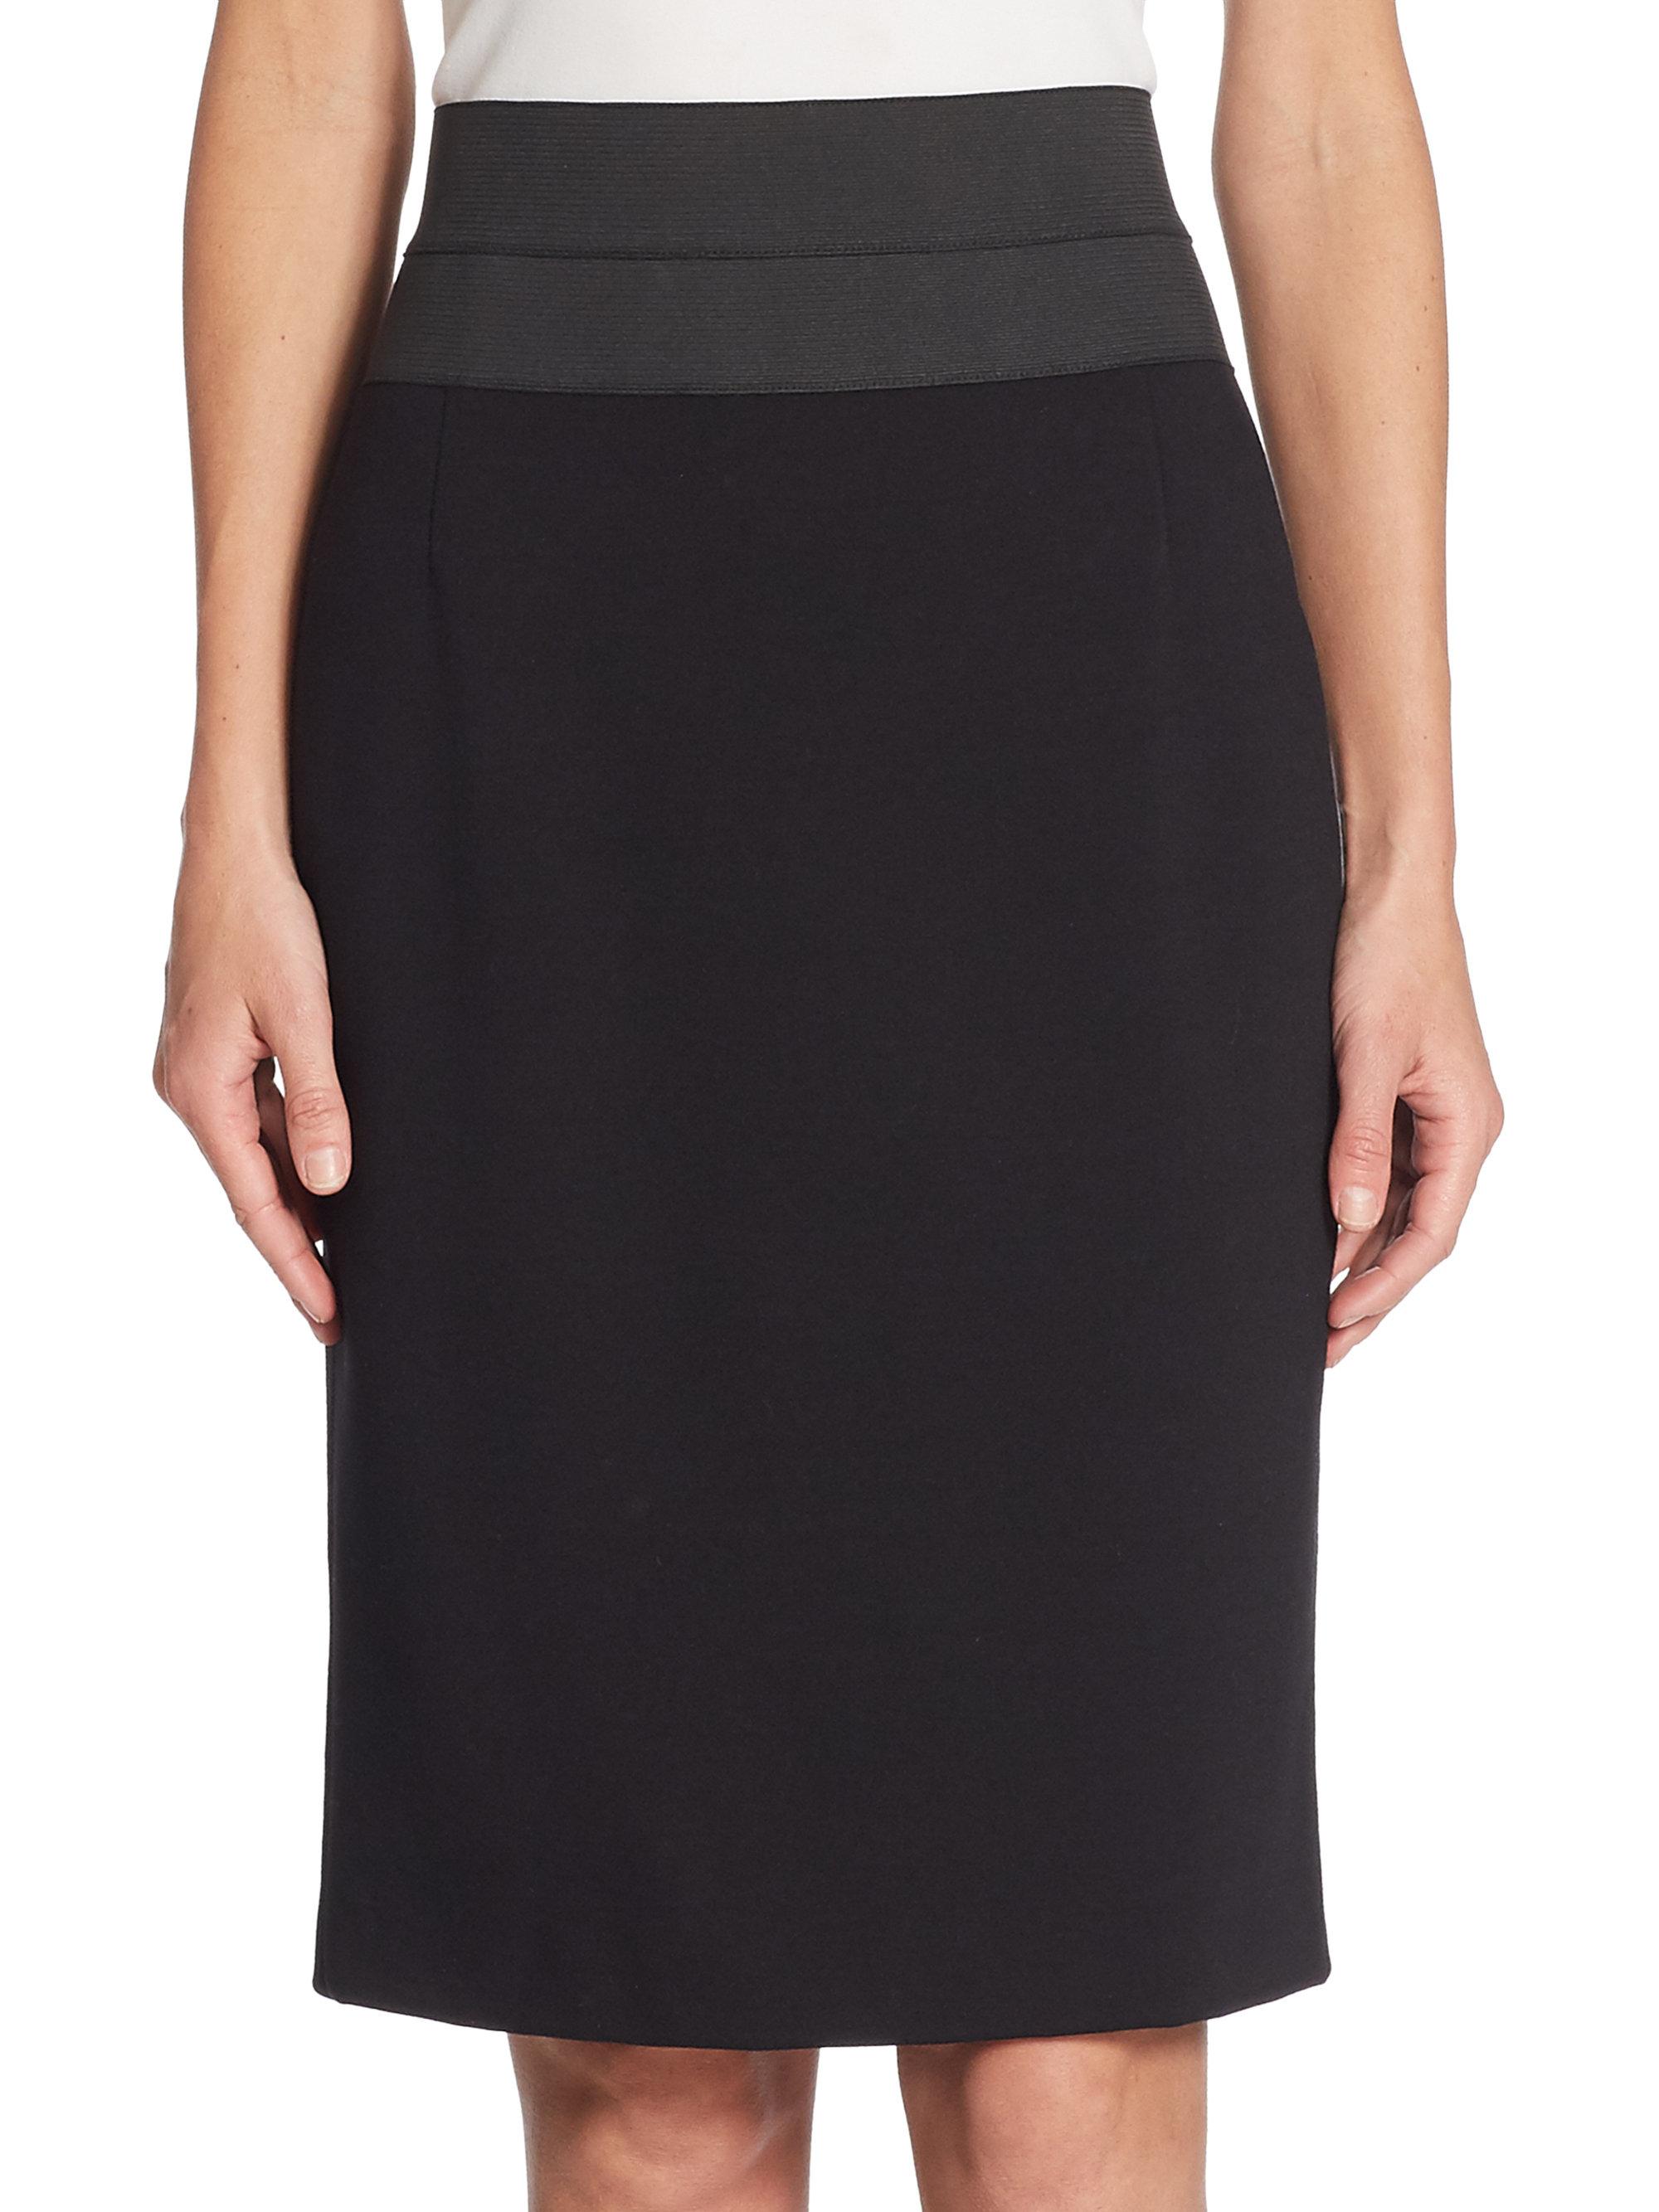 Lyst - Akris Punto Elements High-waist Pencil Skirt in Black